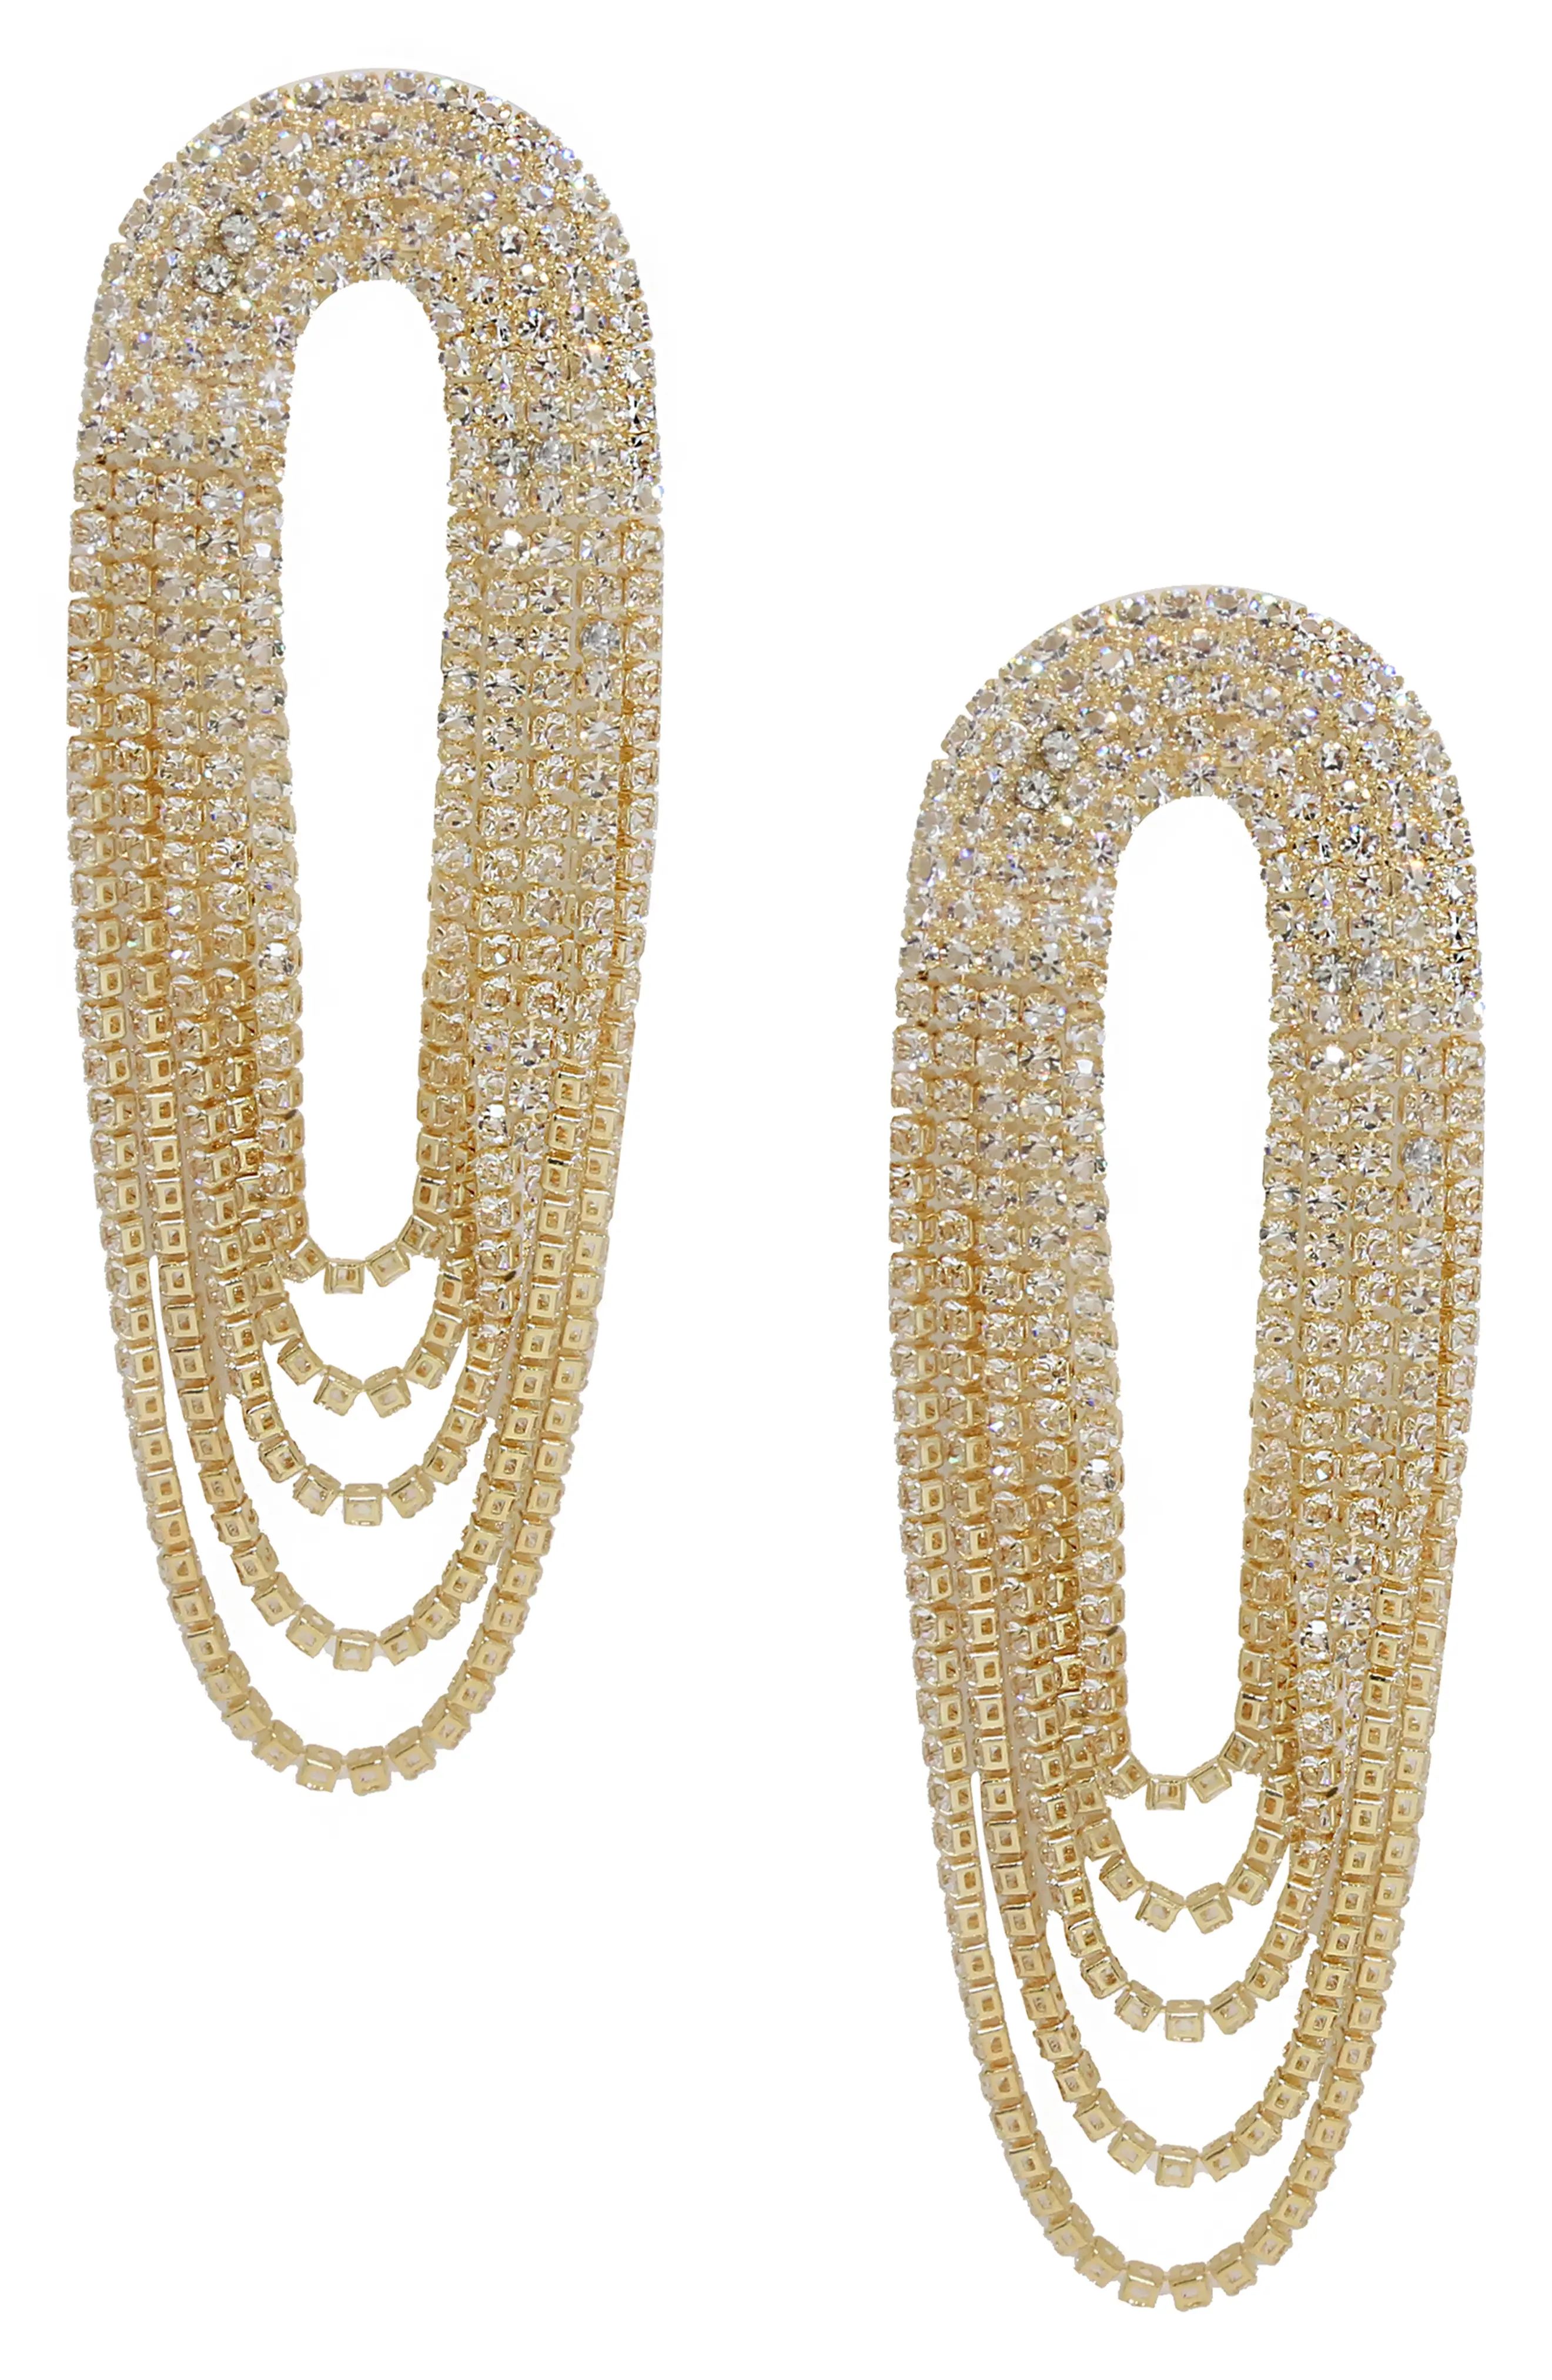 Ettika Crystal Chandelier Earrings in Gold at Nordstrom Gold Earrings Silver Earrings Earring Set | Nordstrom